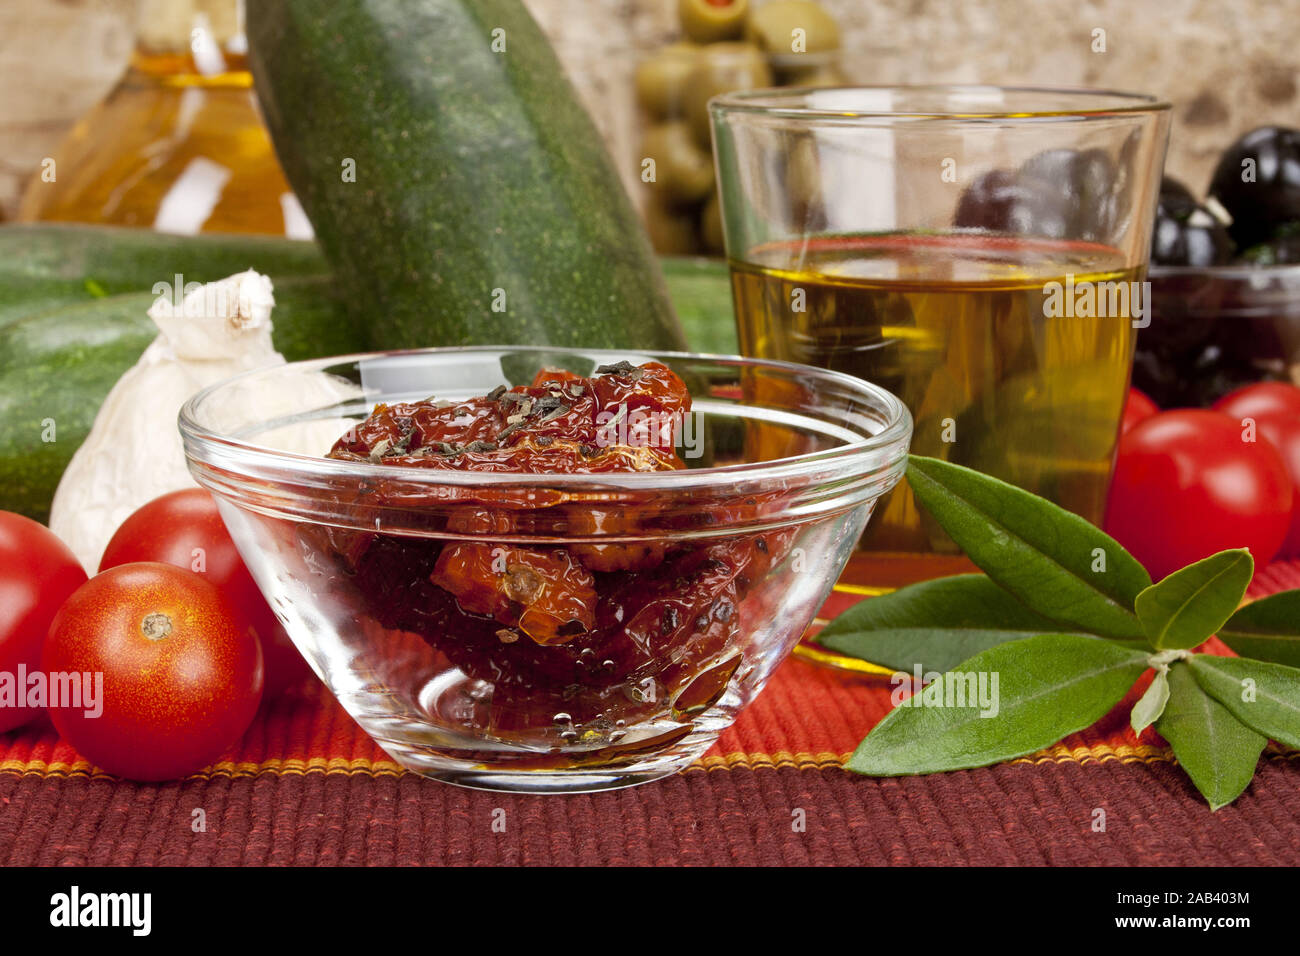 Eingelegte Tomaten in einer Glasschale |Tomates Marinées dans un bol en verre| Banque D'Images